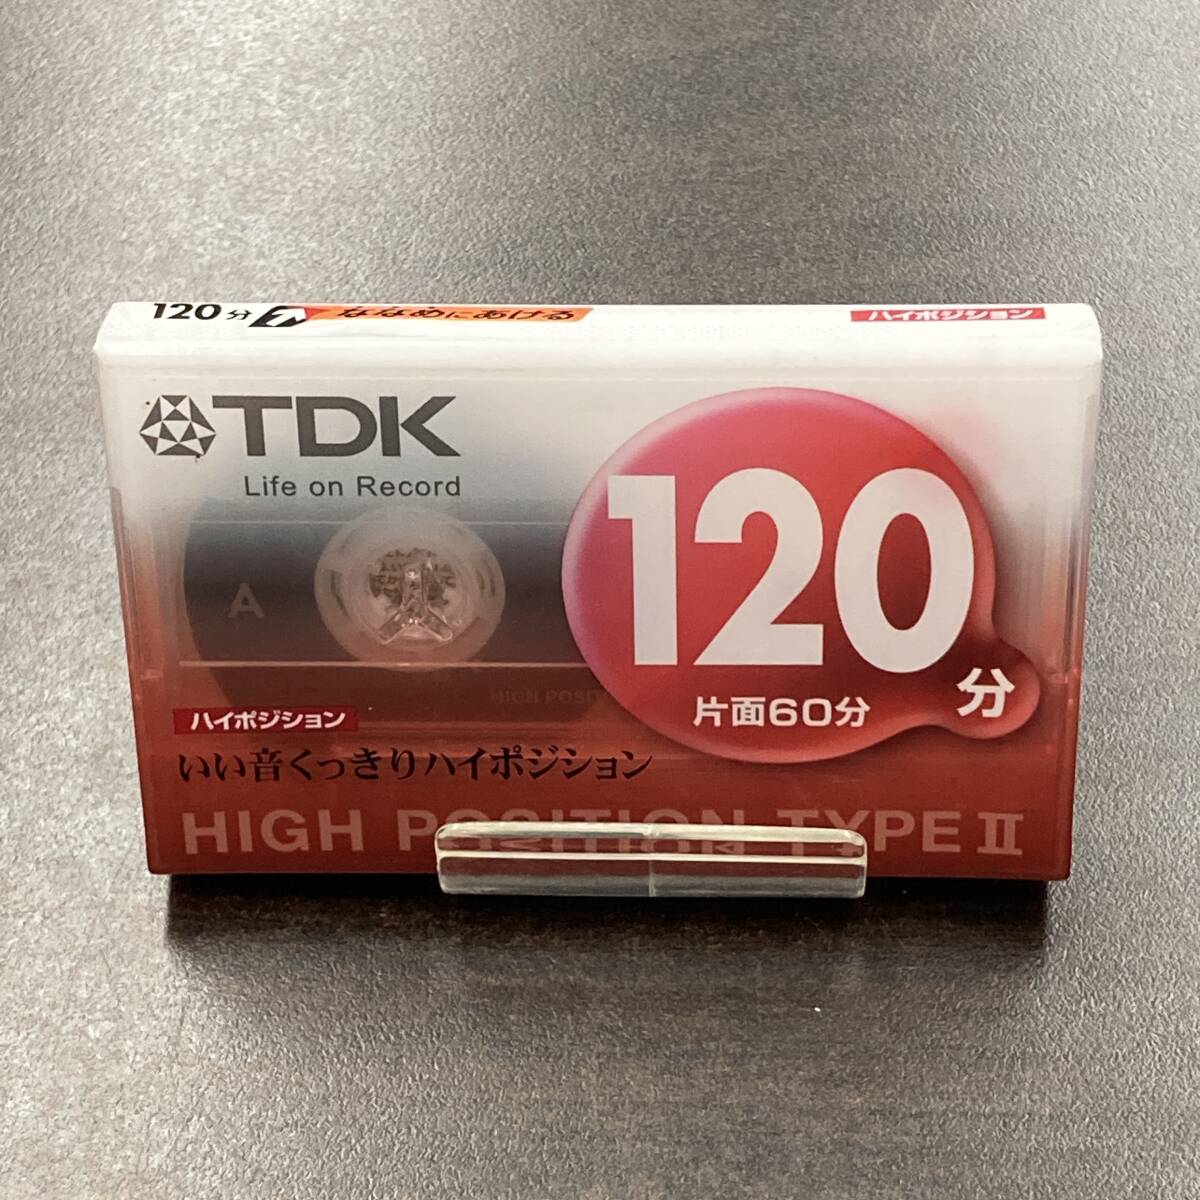 2041N 未使用 TDK 120分 ハイポジ 1本 カセットテープ/One TDK Type II High Position unused Audio Cassette_画像1